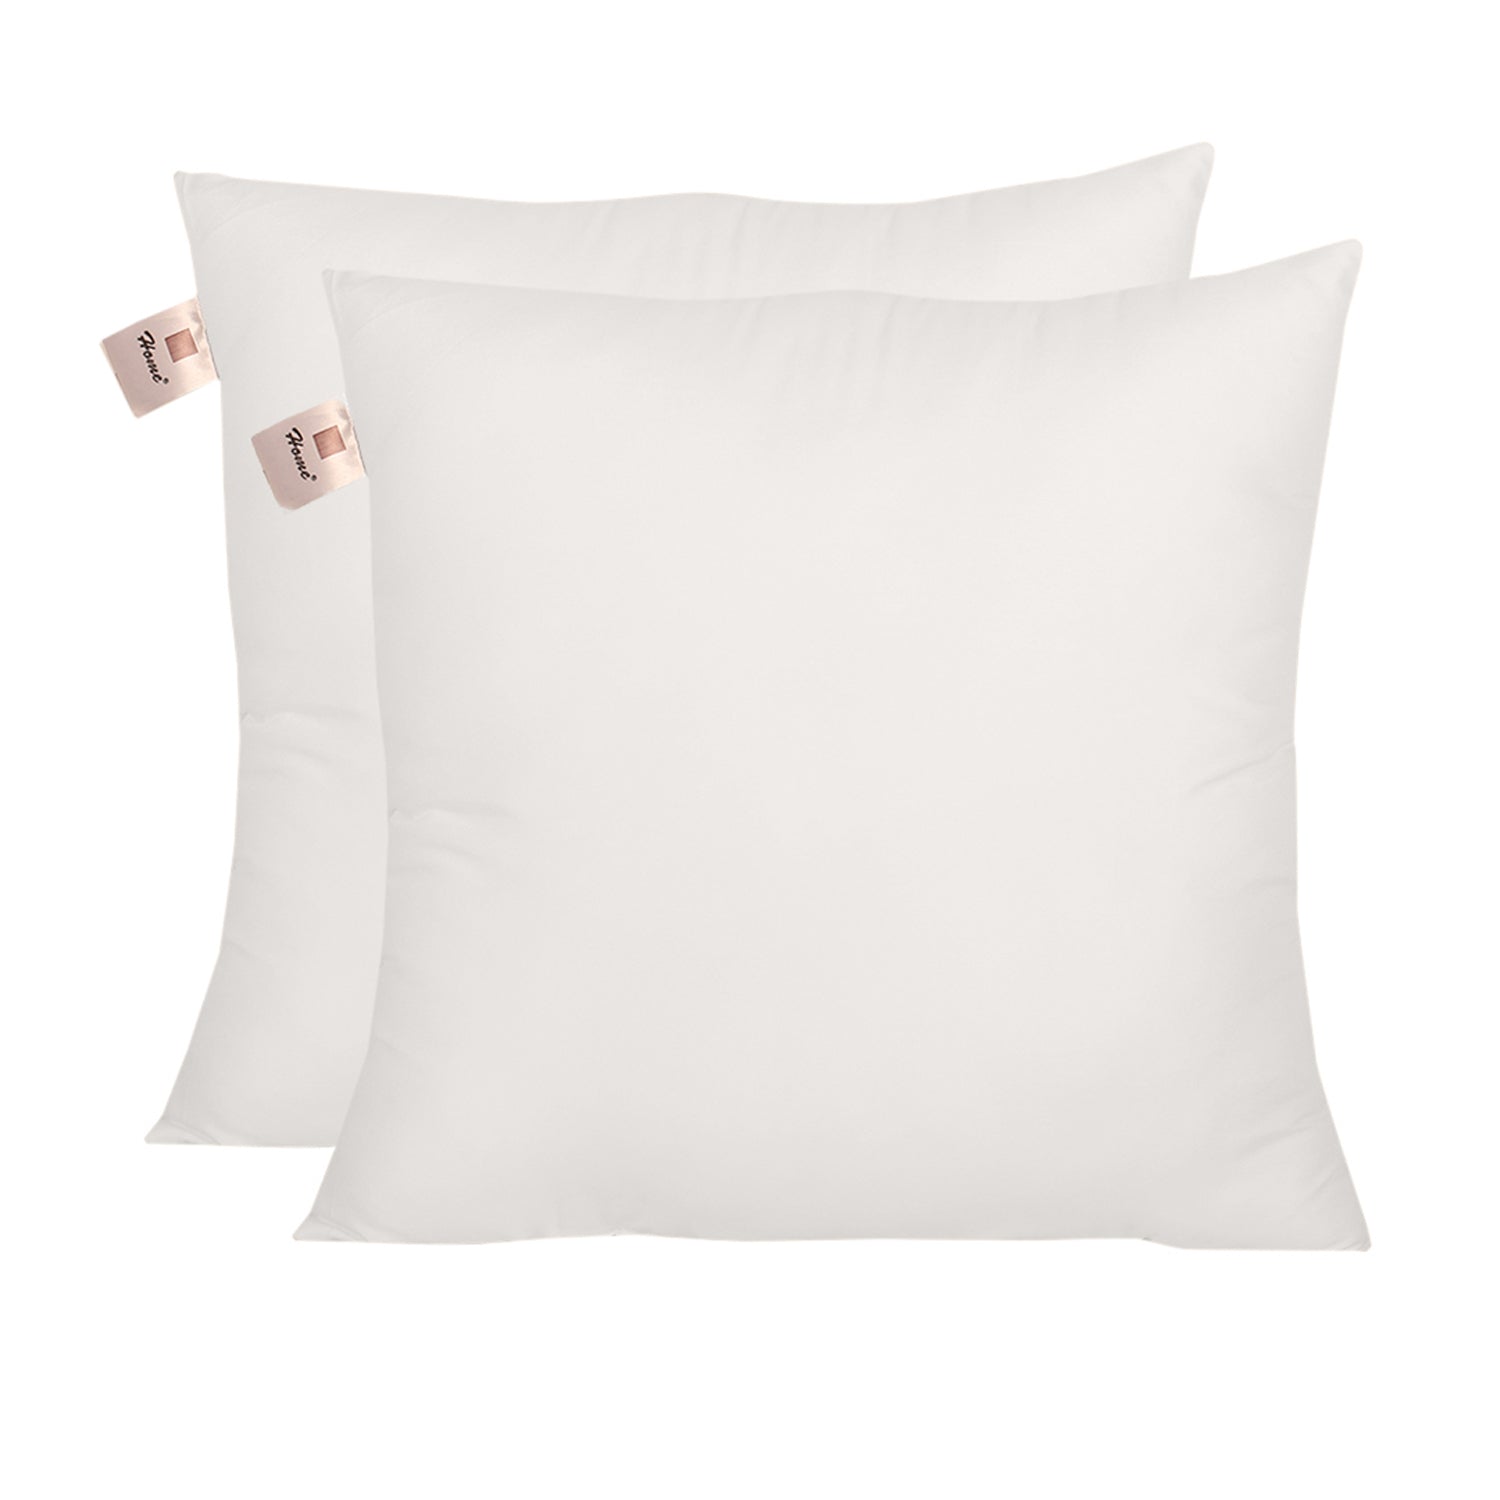 Micro Fiber Cushion Insert Extra Soft, White | 24x24 Inch